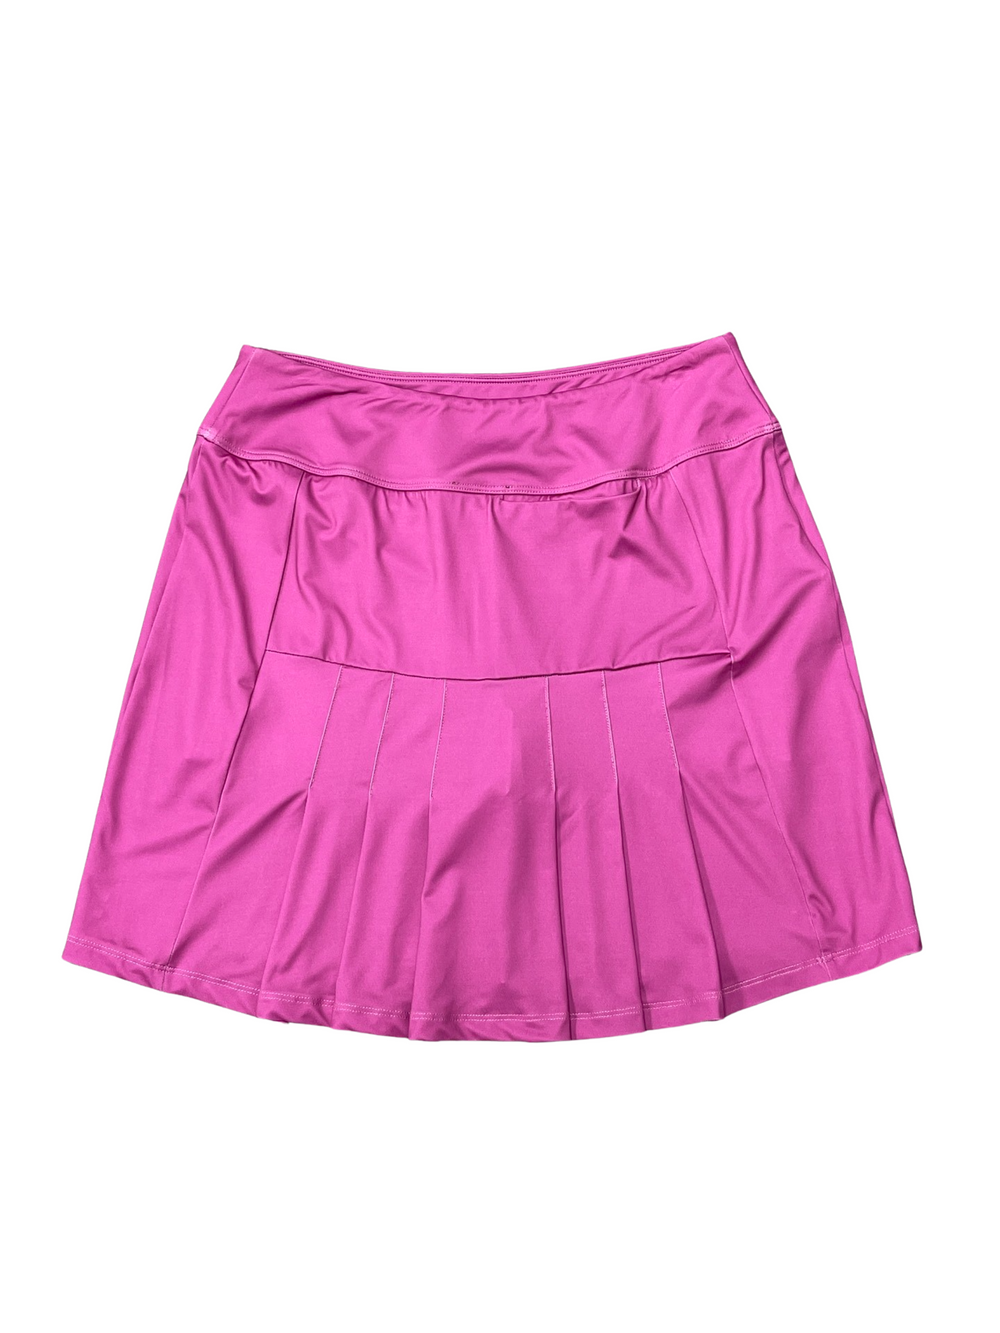 Amy Sport Marissa Pleated Pink Rose Skort - X-Small - Skorzie